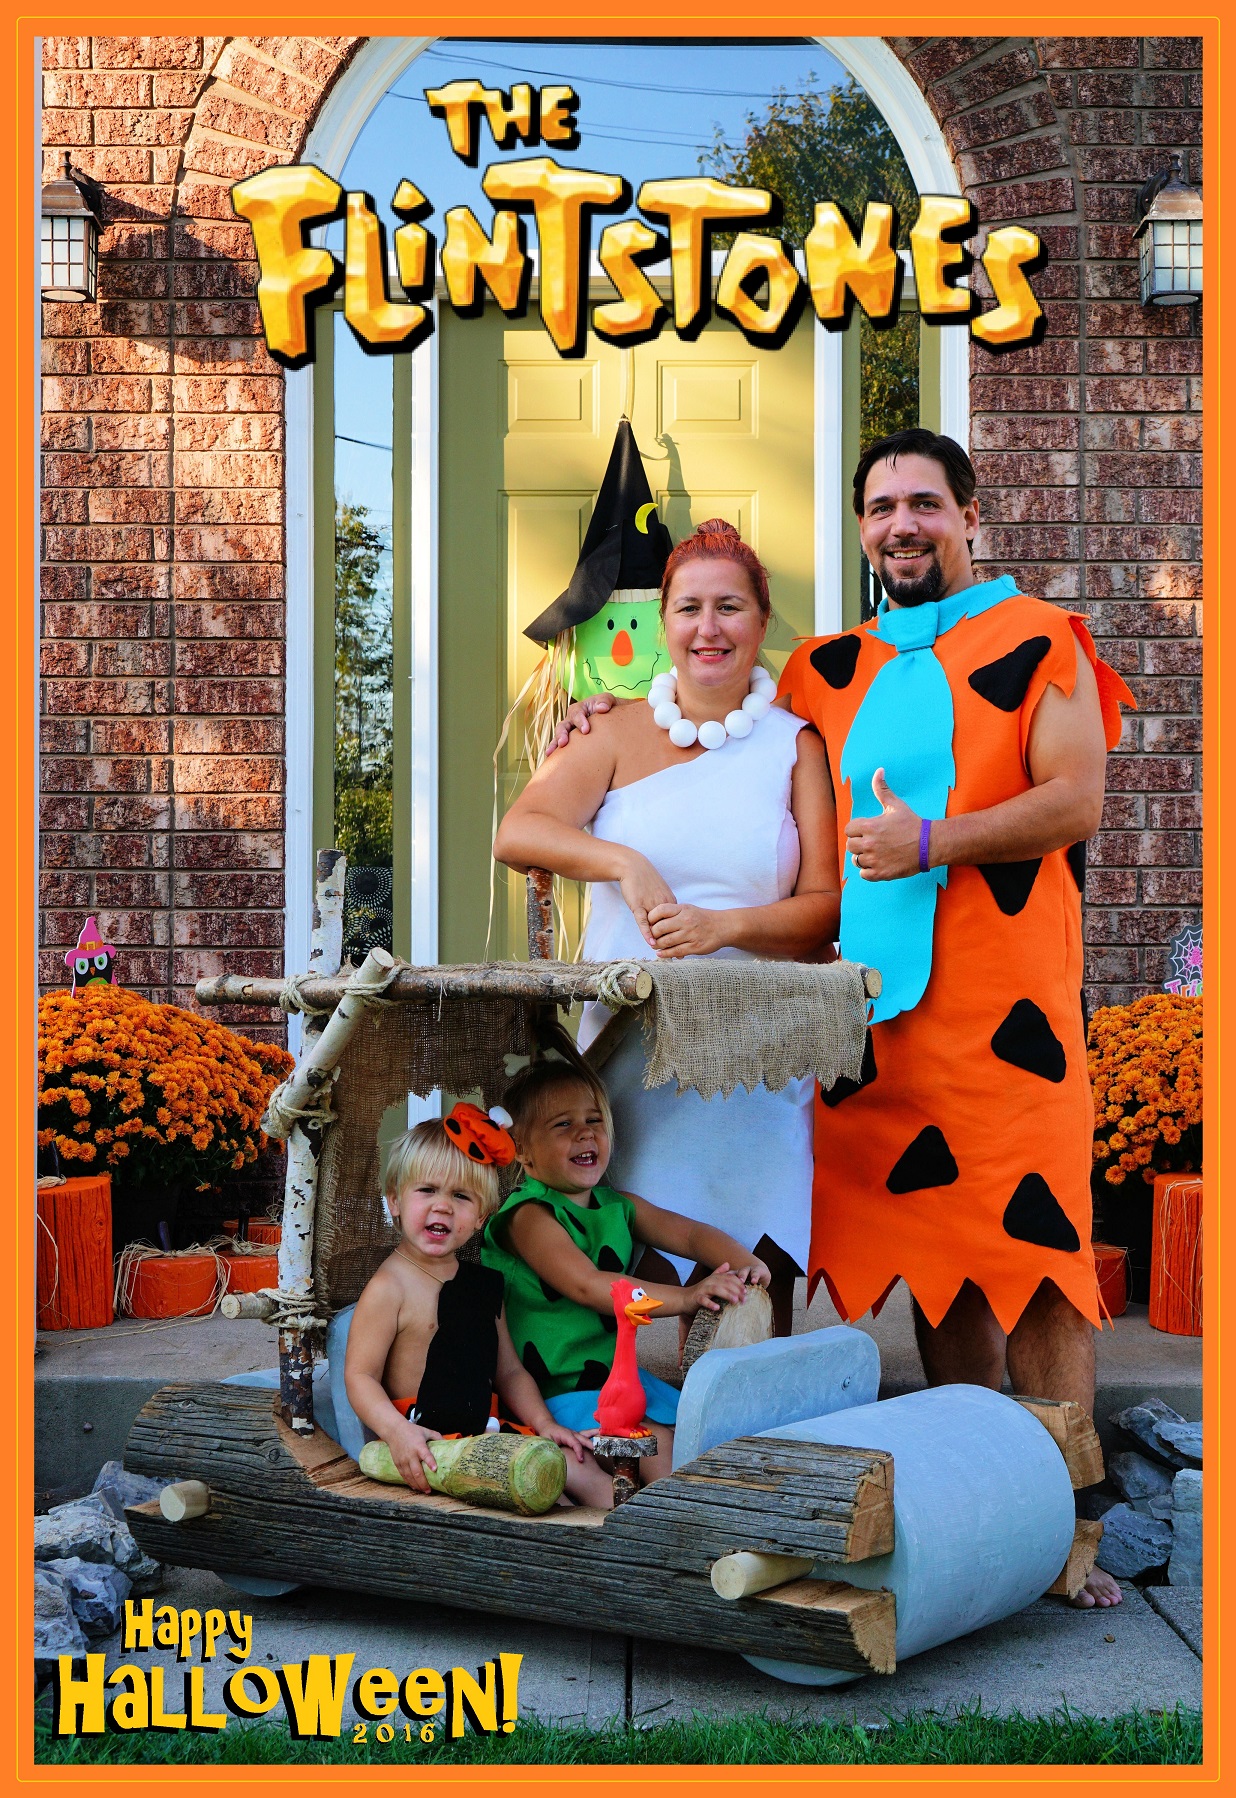 Coolest Flintstones Family Halloween Costume with Hand Built Car!